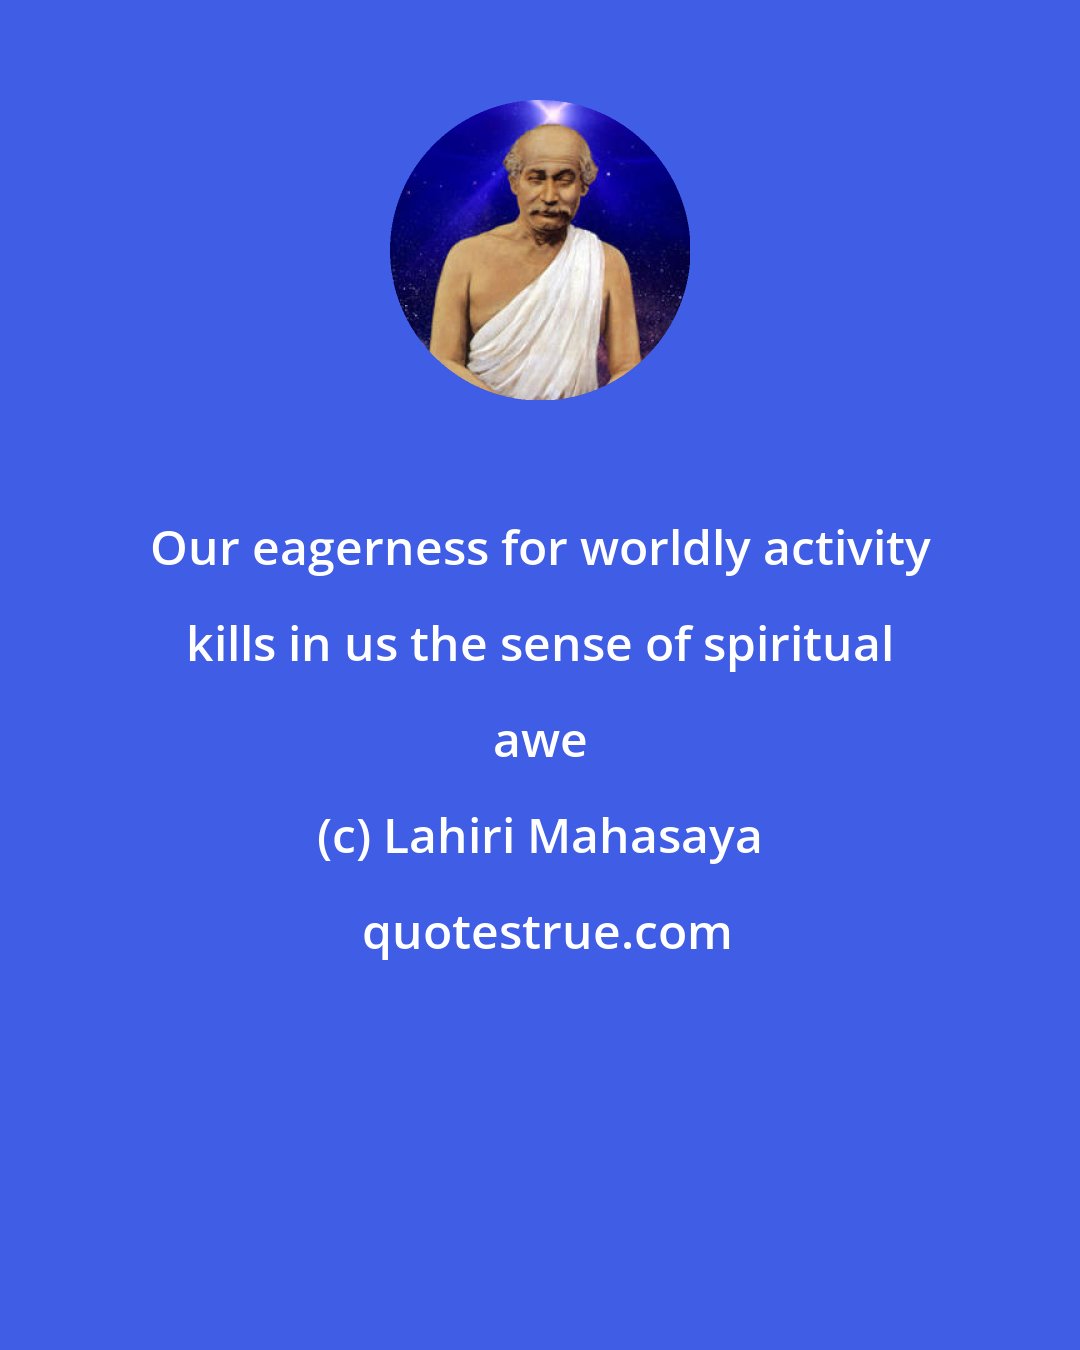 Lahiri Mahasaya: Our eagerness for worldly activity kills in us the sense of spiritual awe